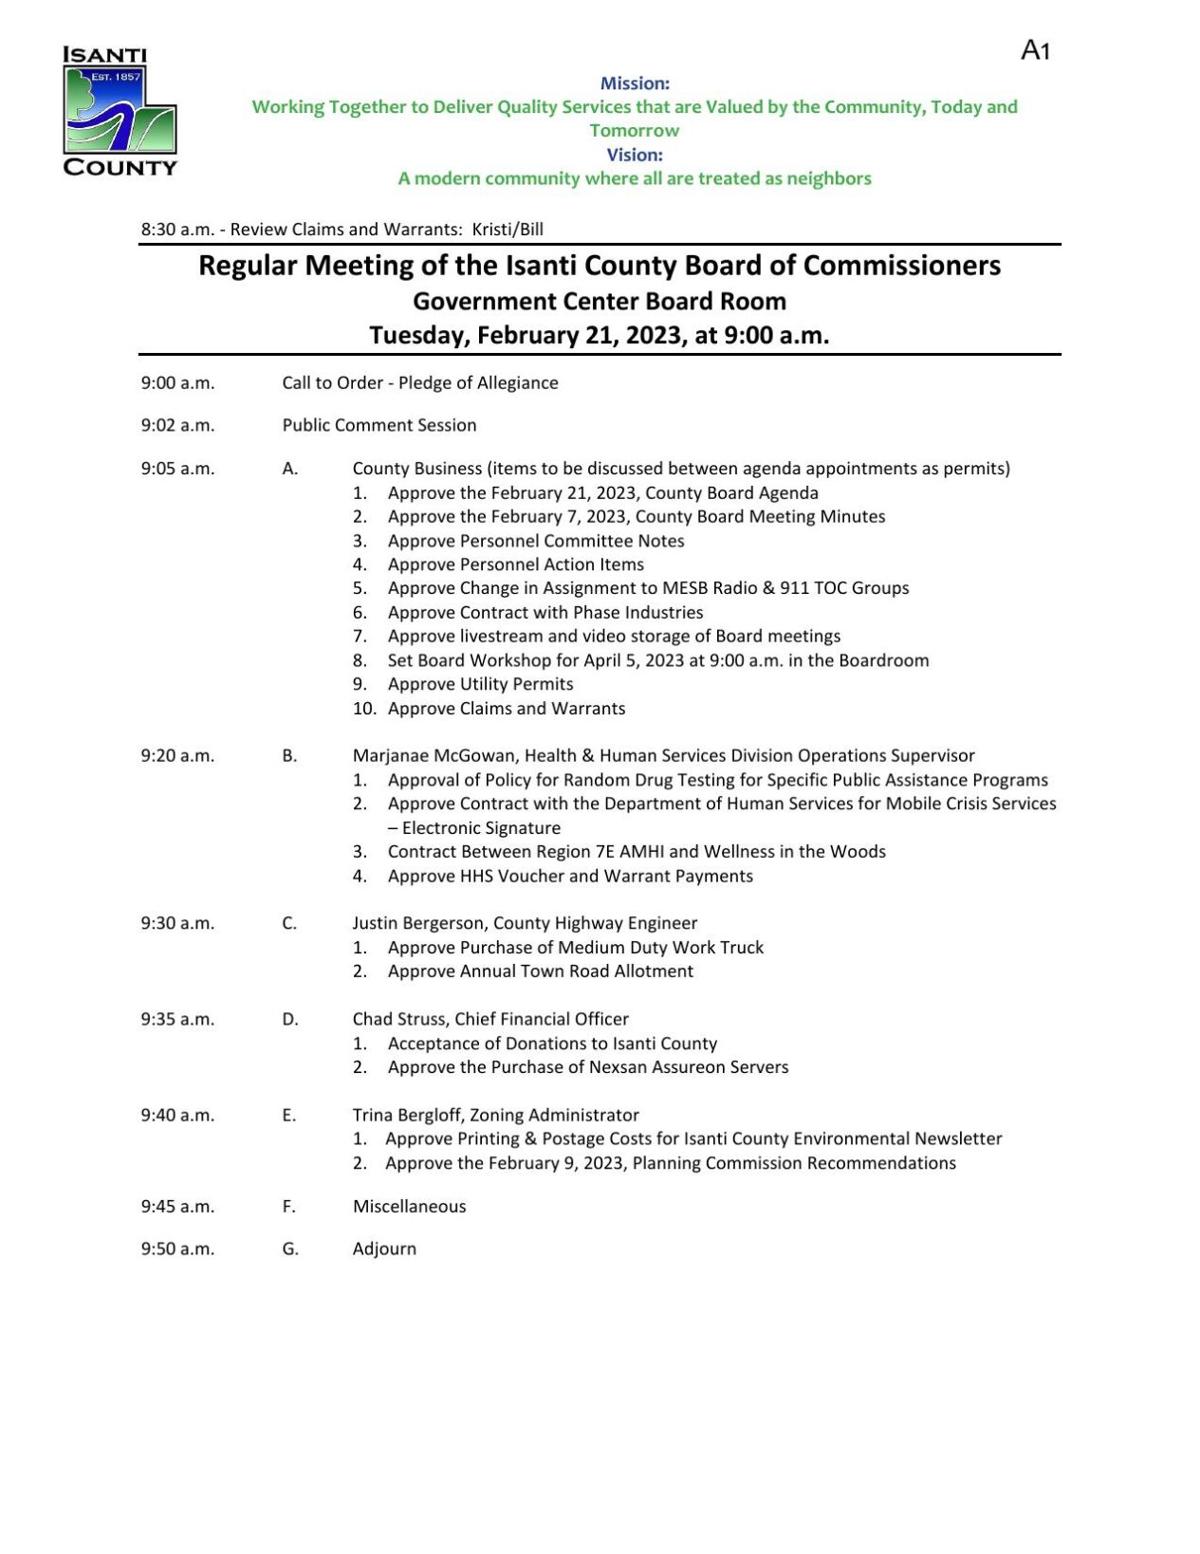 Isanti County Board of Commissioners Feb. 21, 2023 agenda